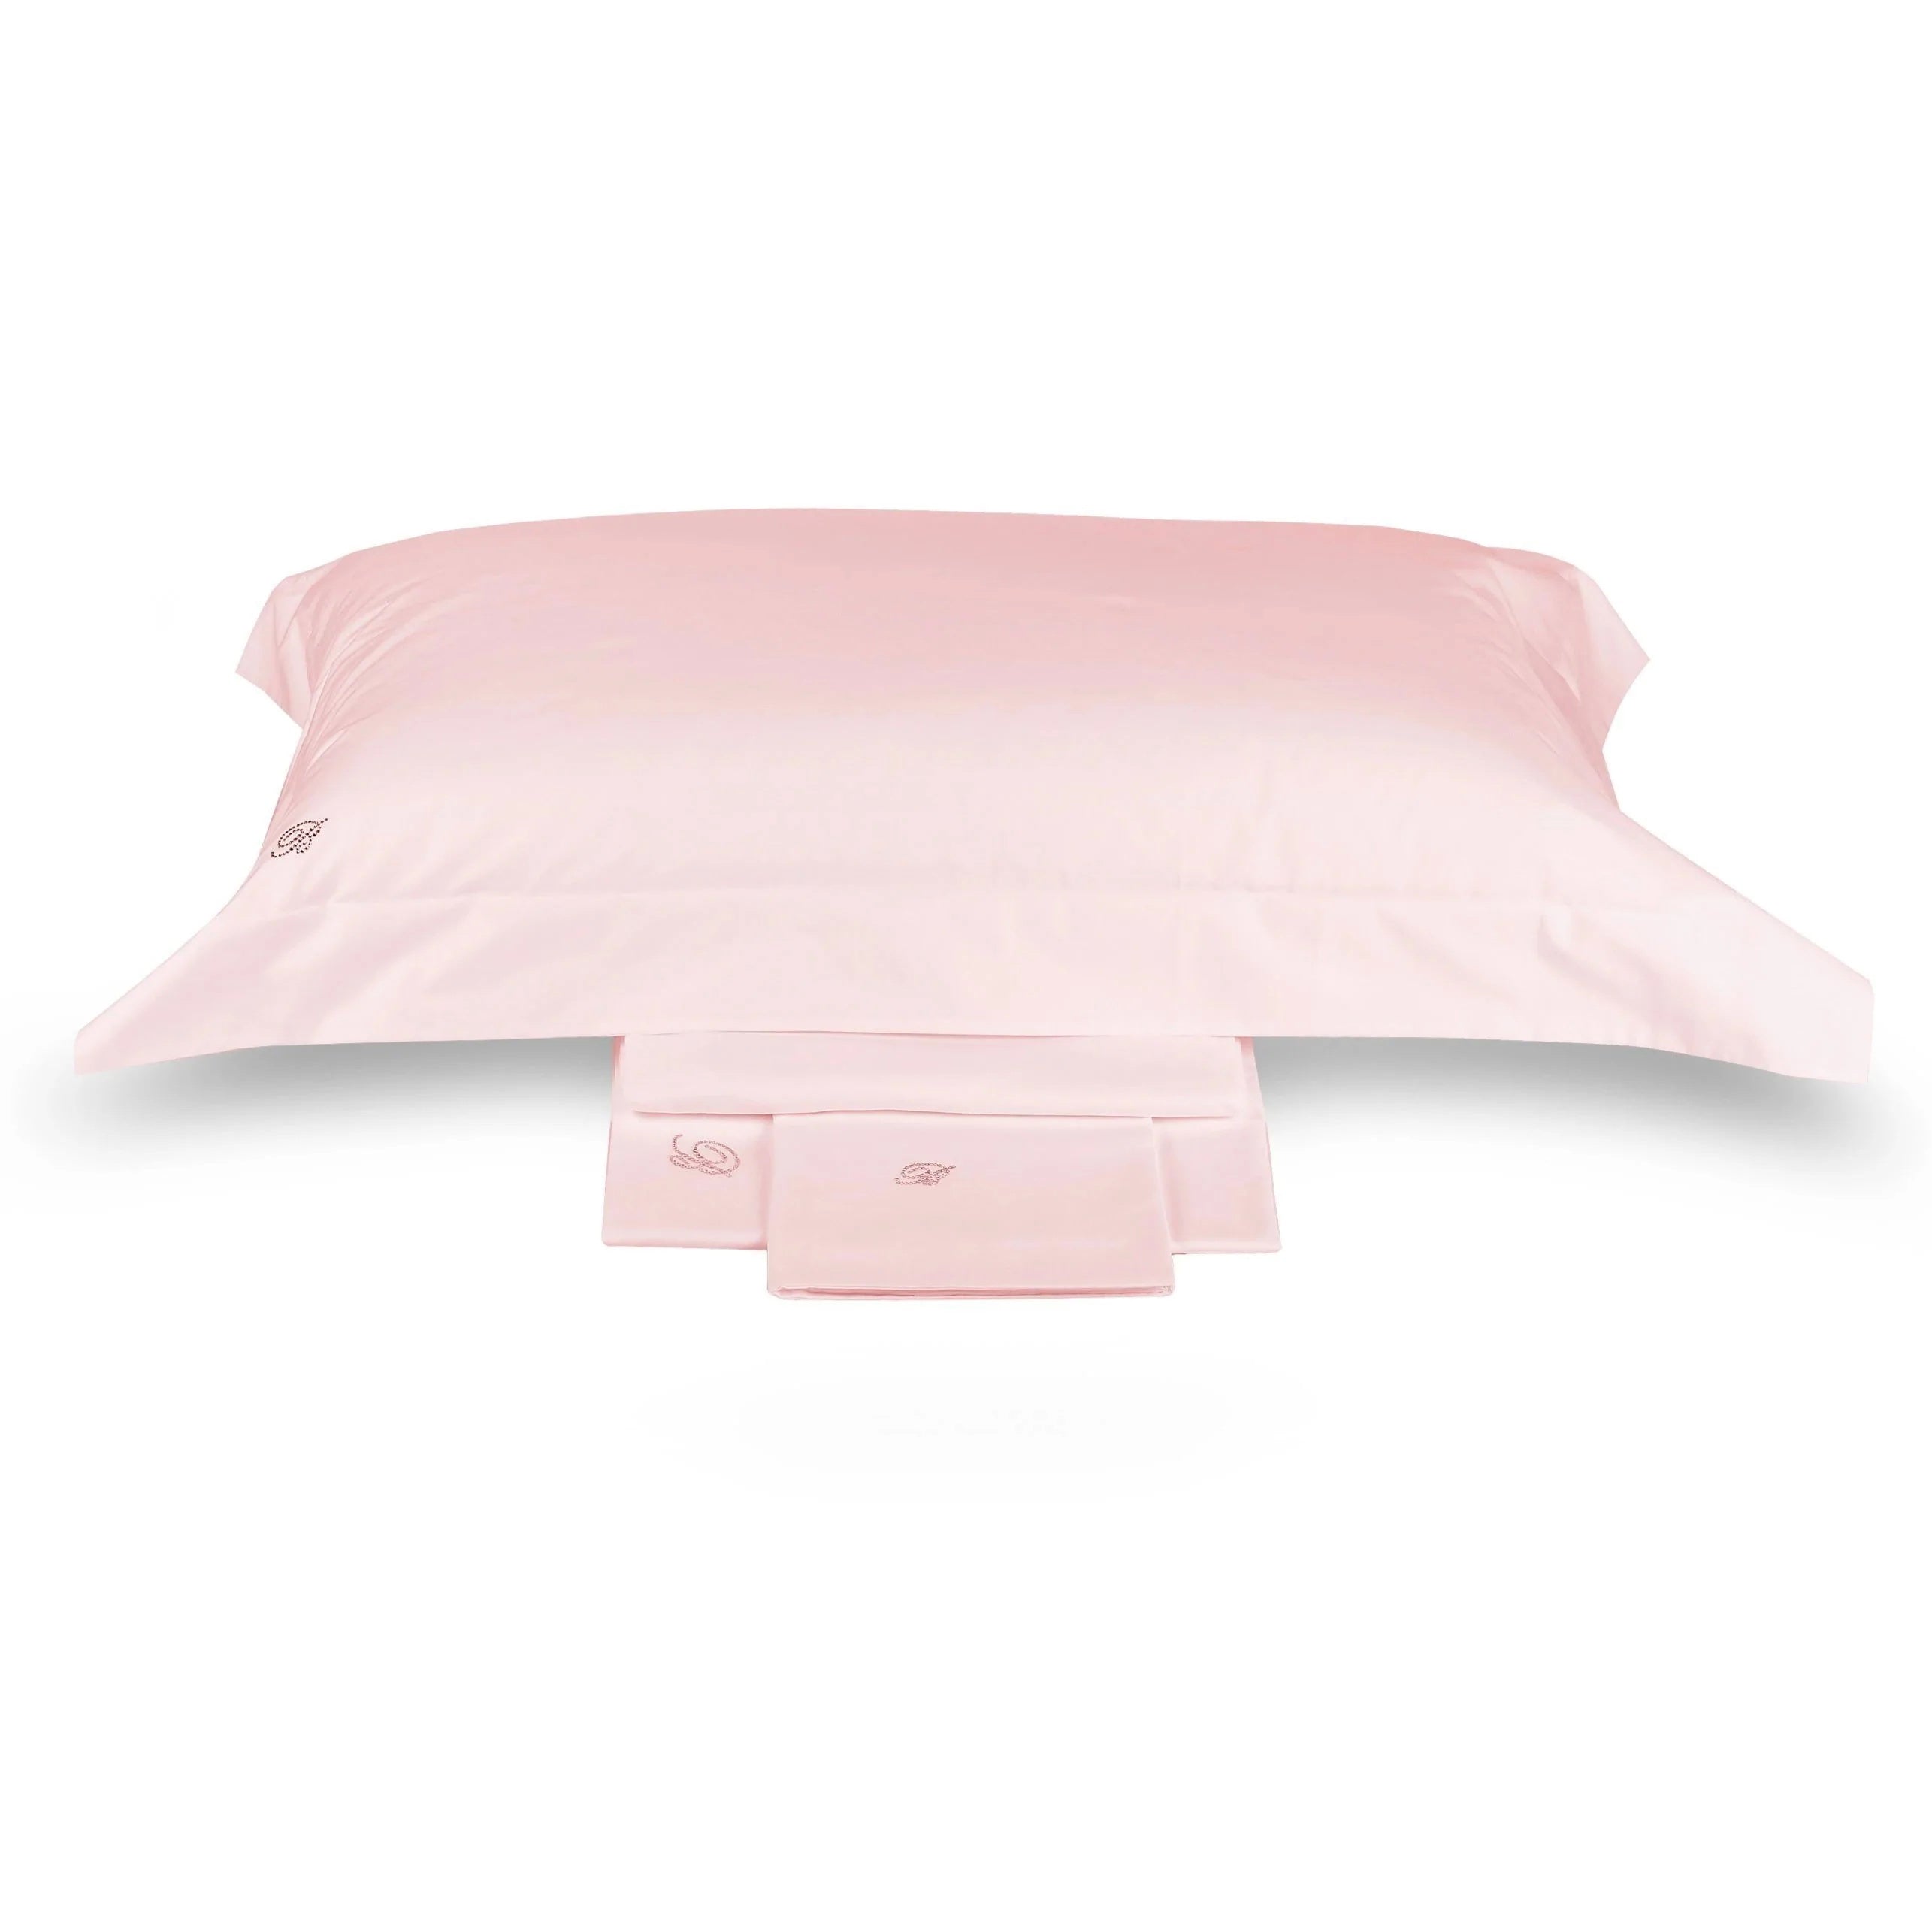 Double bed linen set Blu Valentina Blumarine